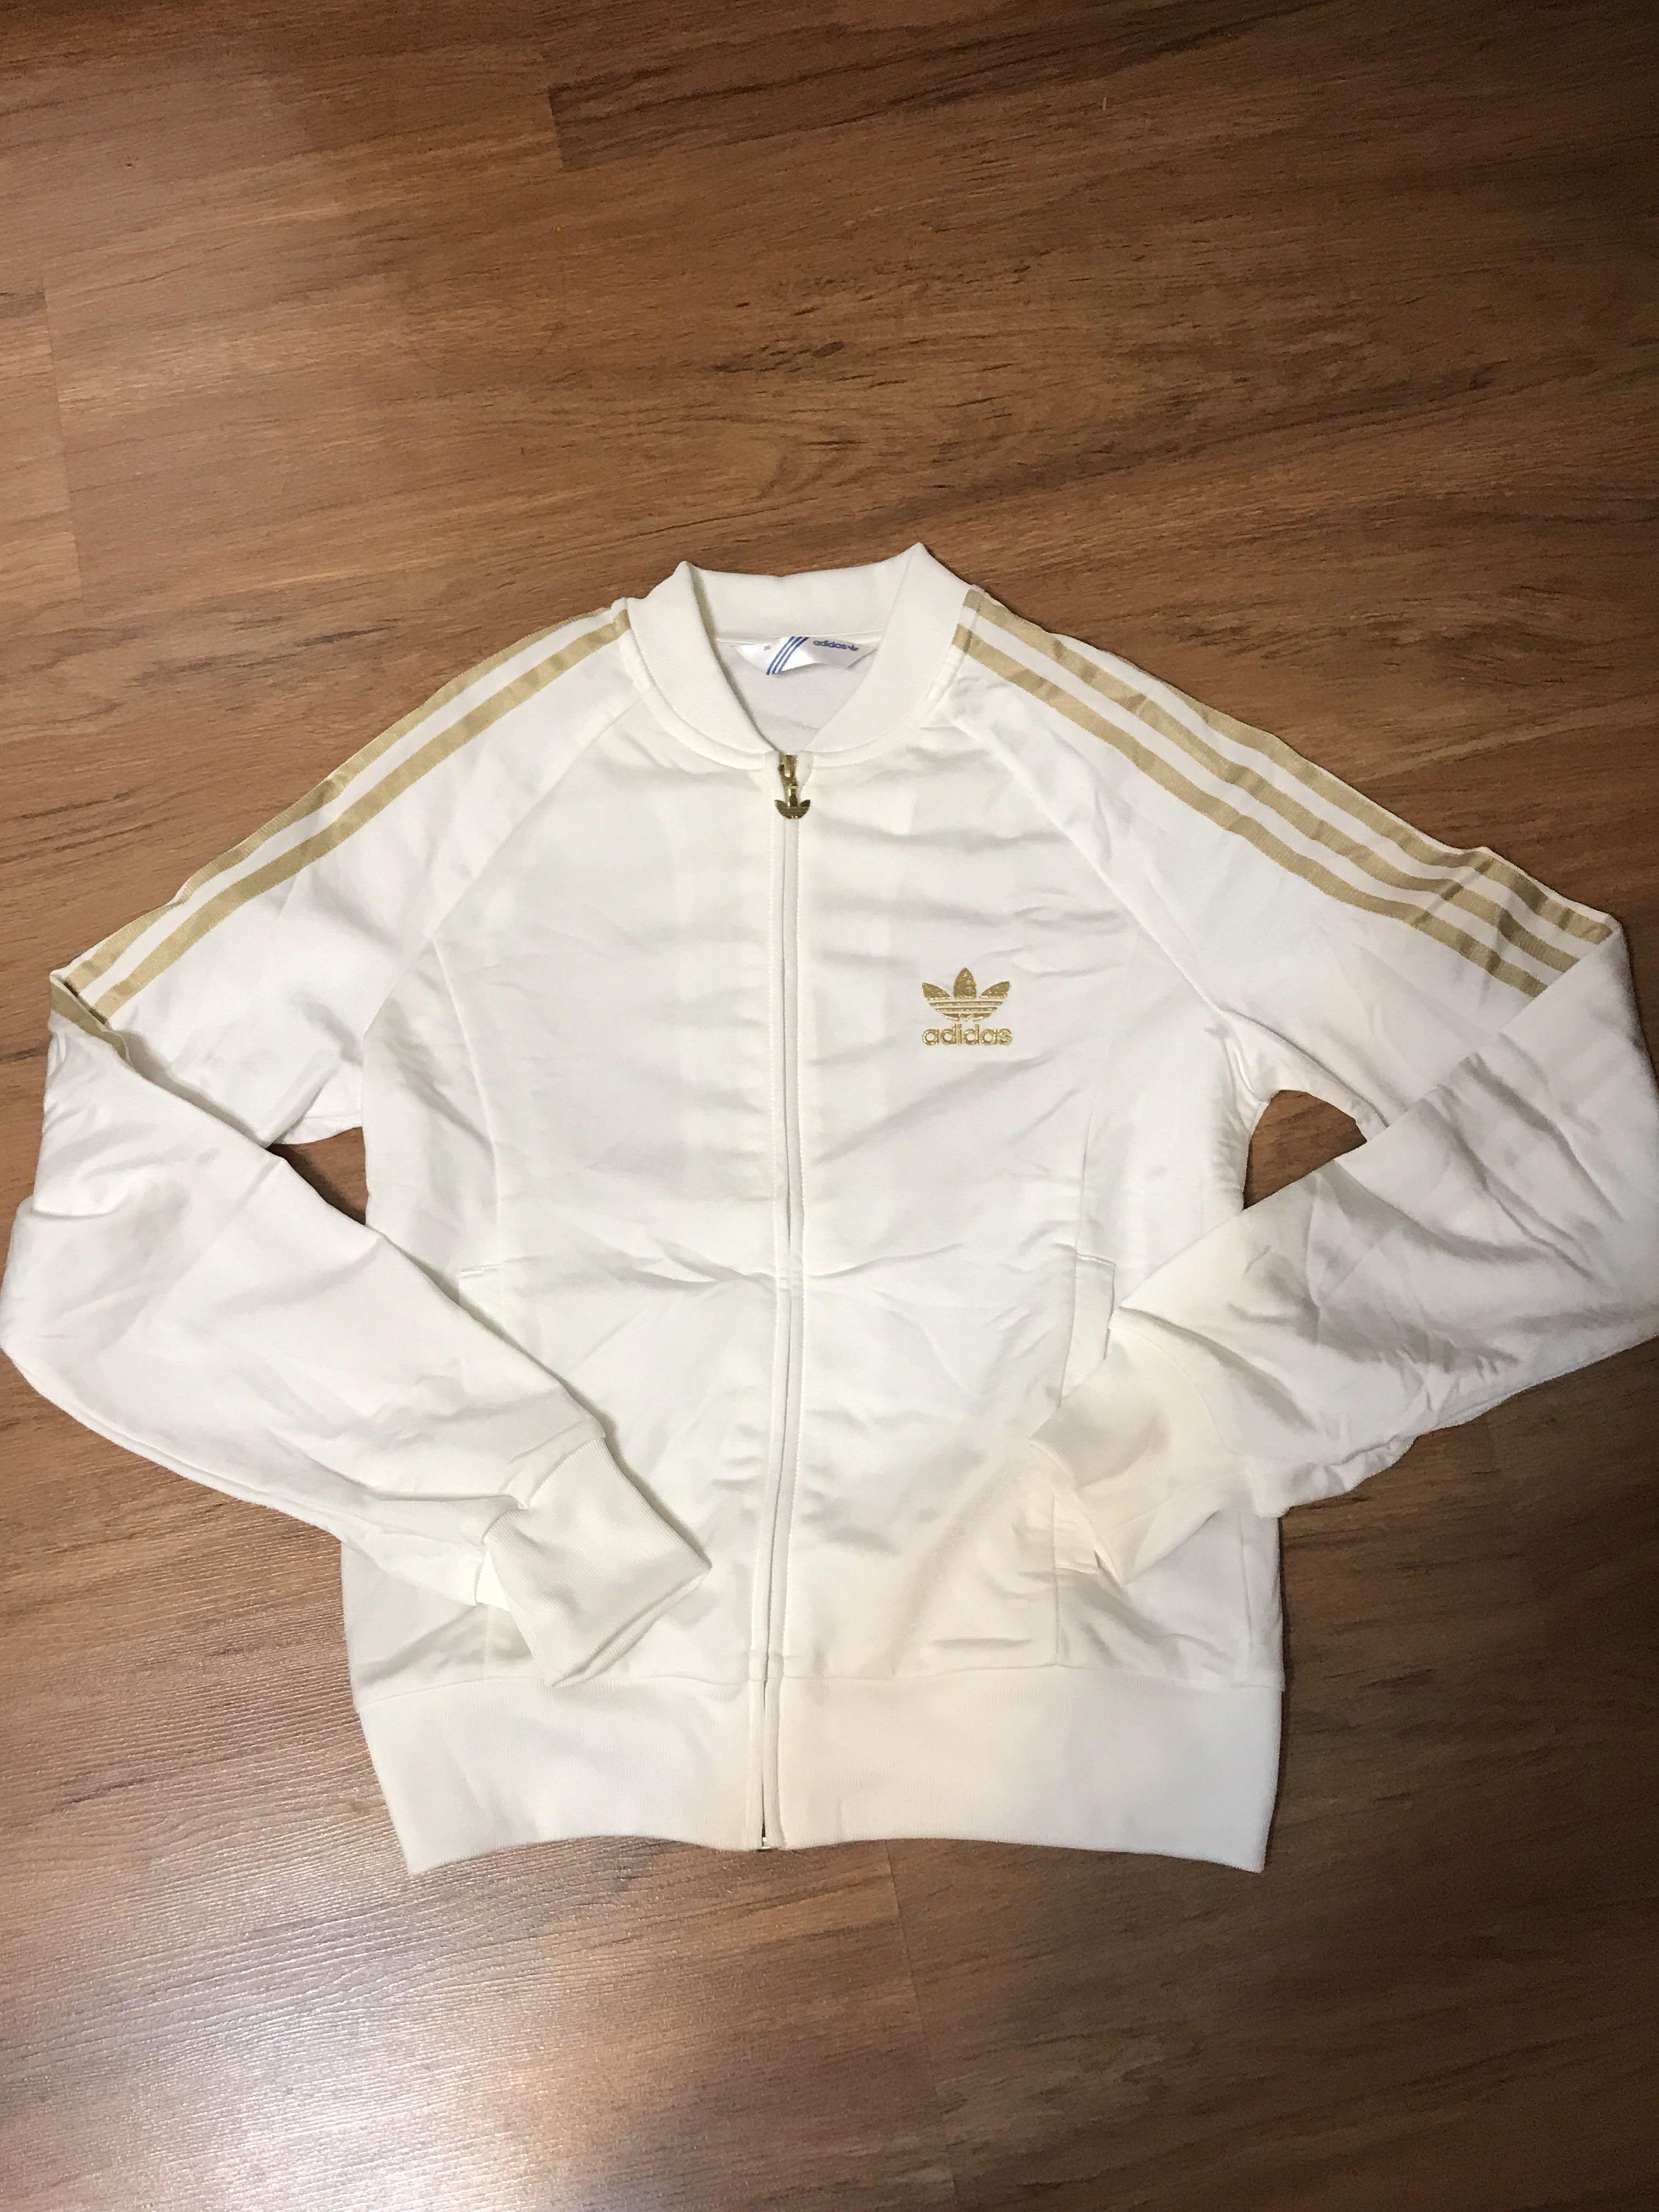 white and gold adidas jacket